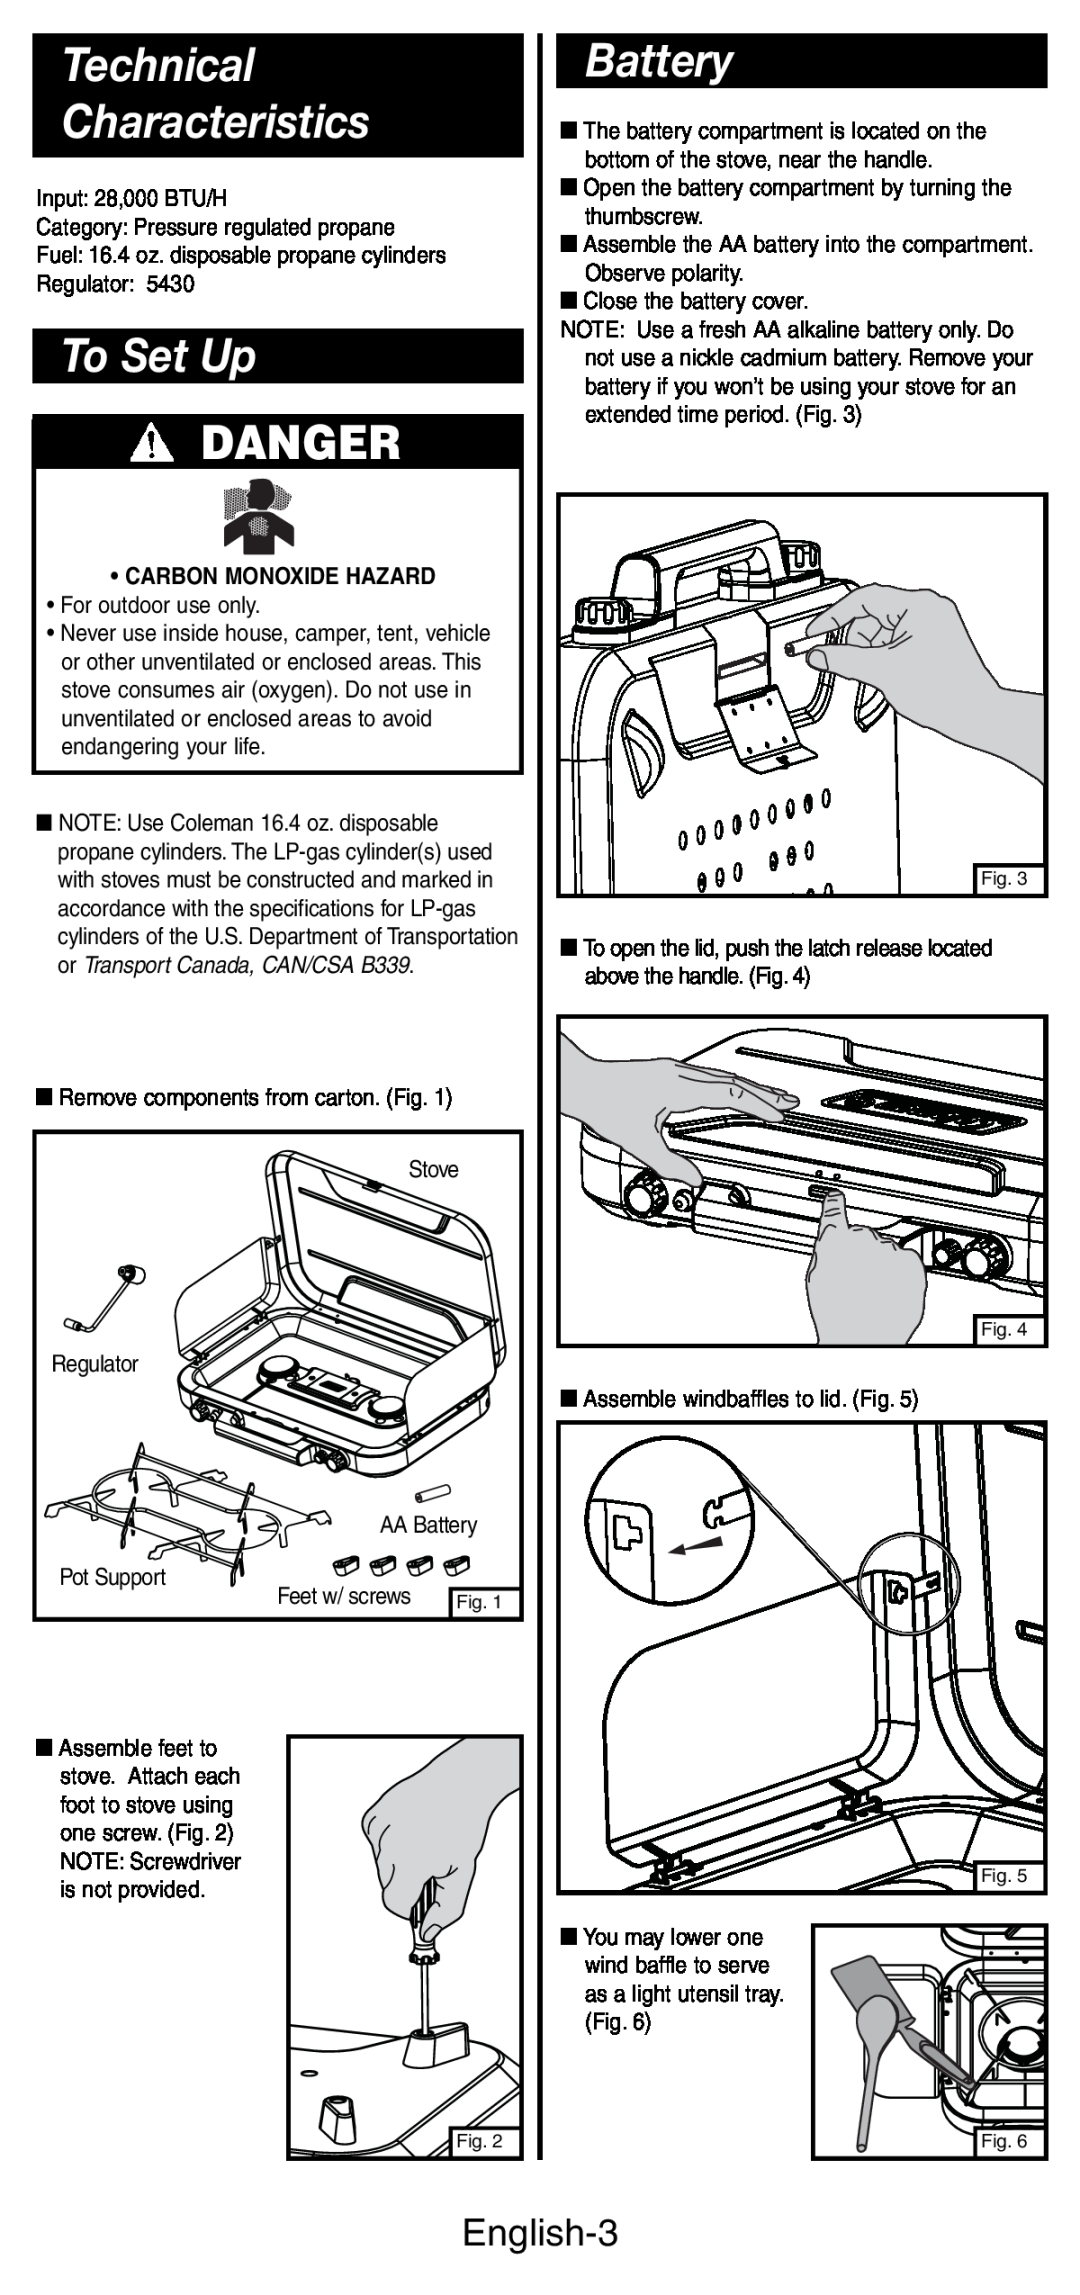 Coleman 5444 Series manual Technical Characteristics, To Set Up, Battery, Danger, English-3, Carbon Monoxide Hazard 